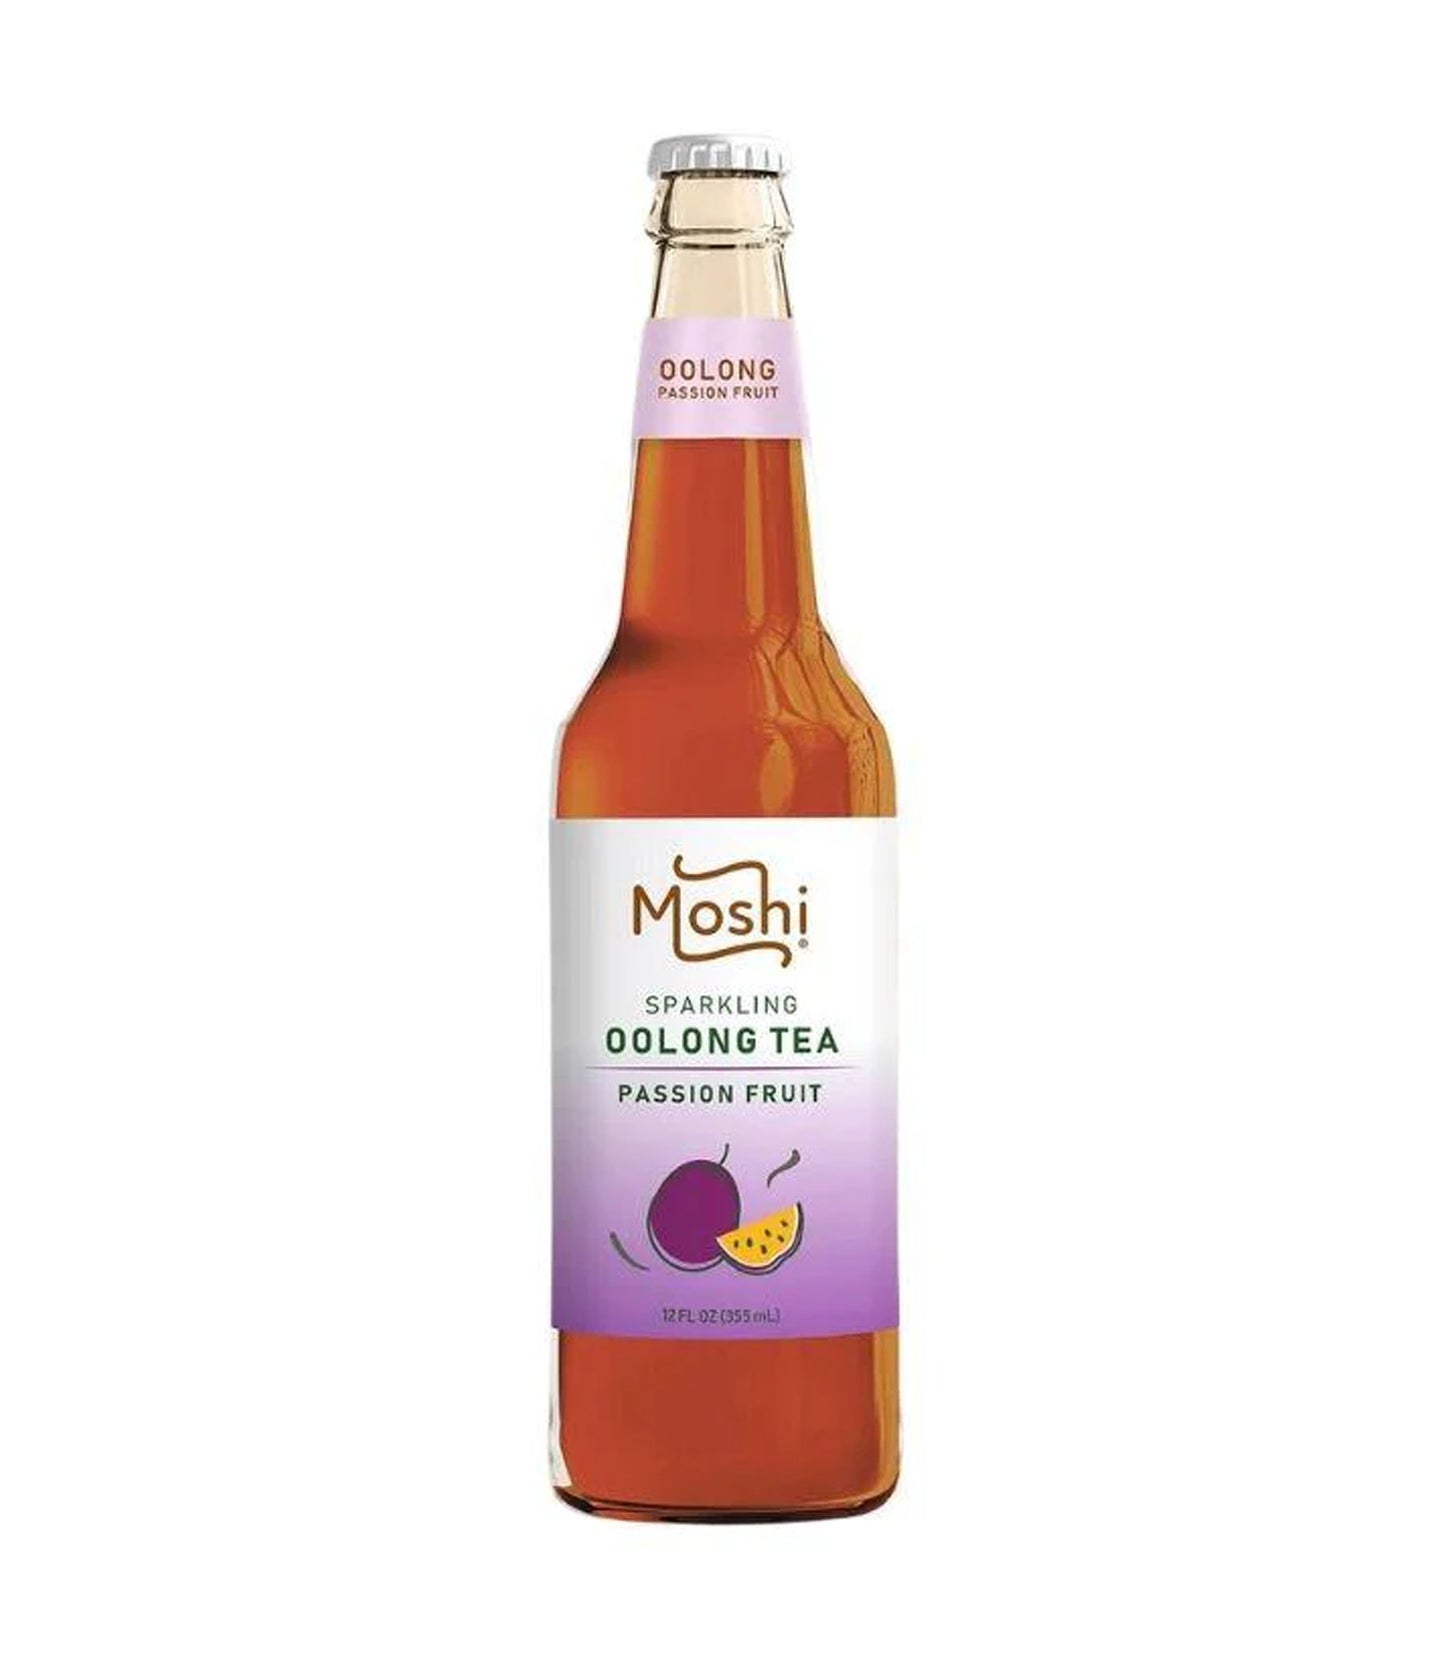 Moshi Sparkling Oolong Tea Passion Fruit (355ML)